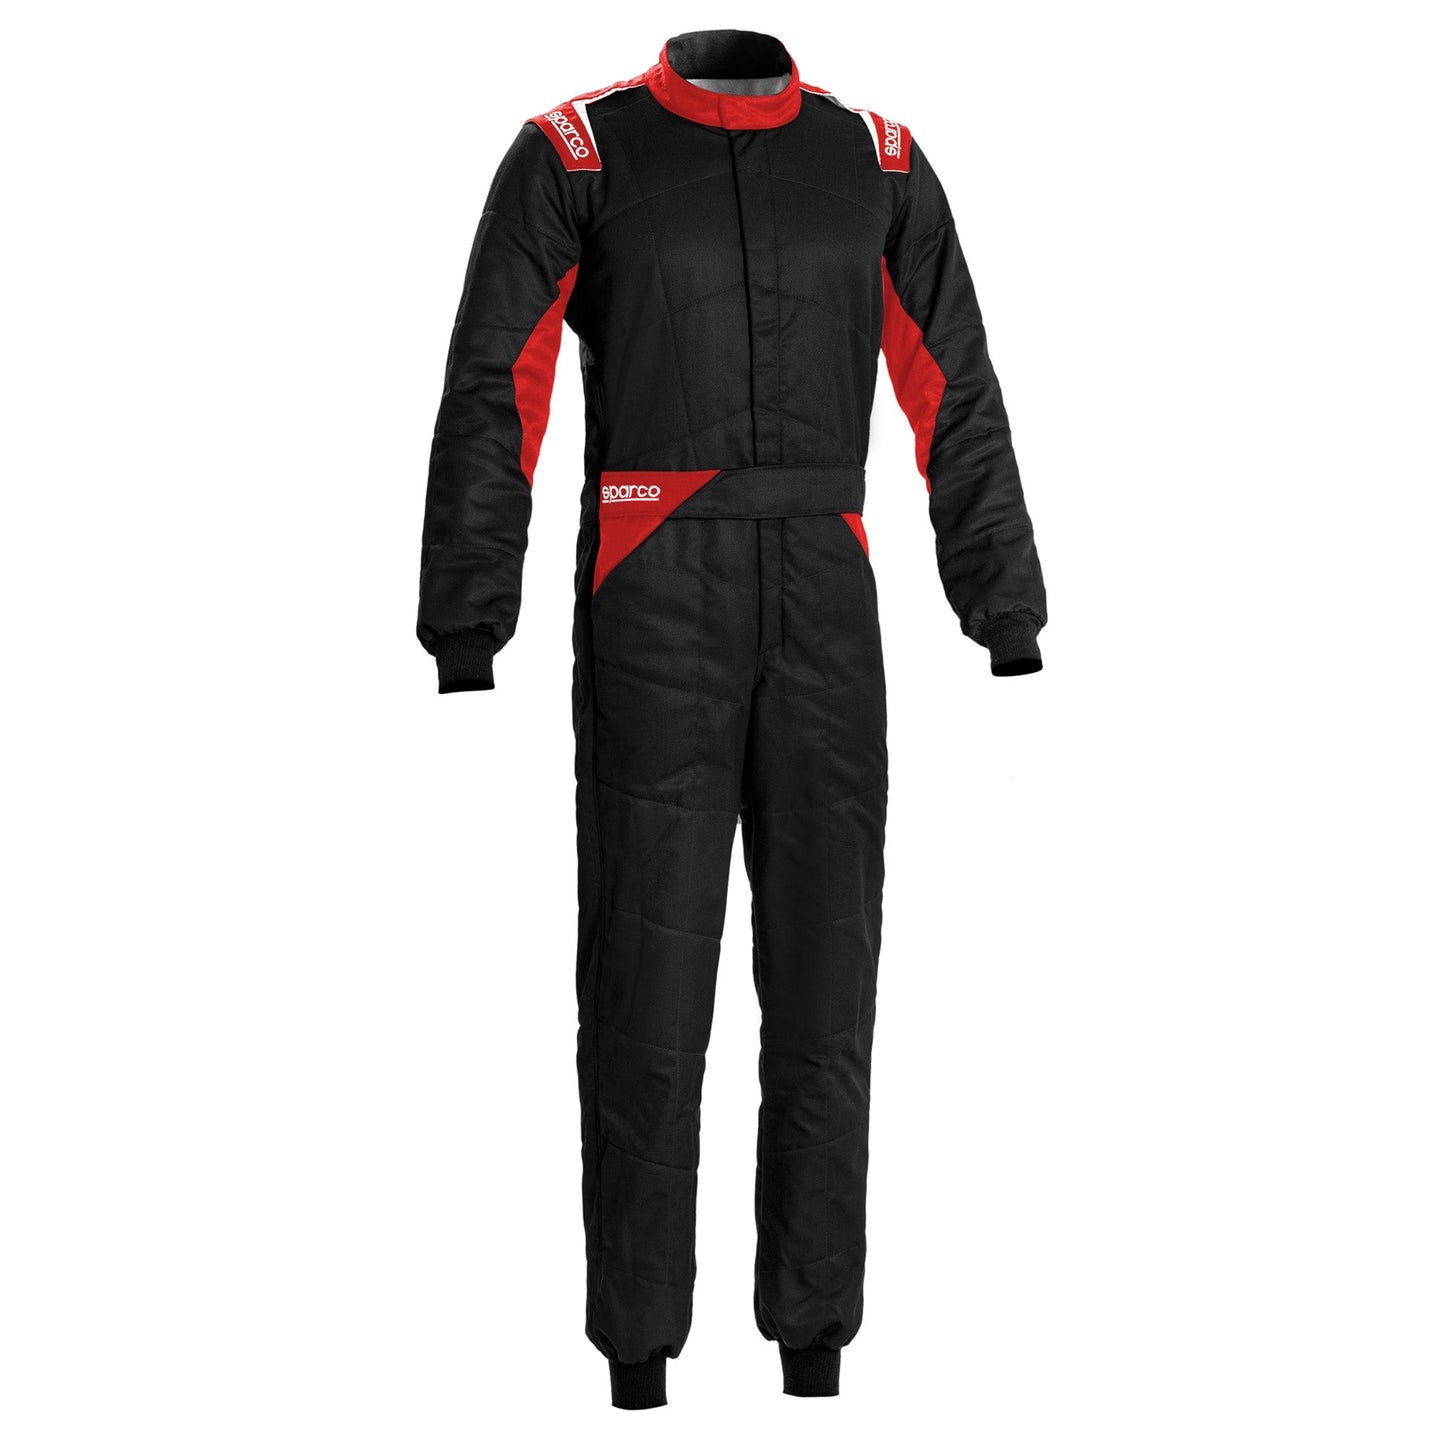 Sparco Sprint Racing Suit - 2021 Model